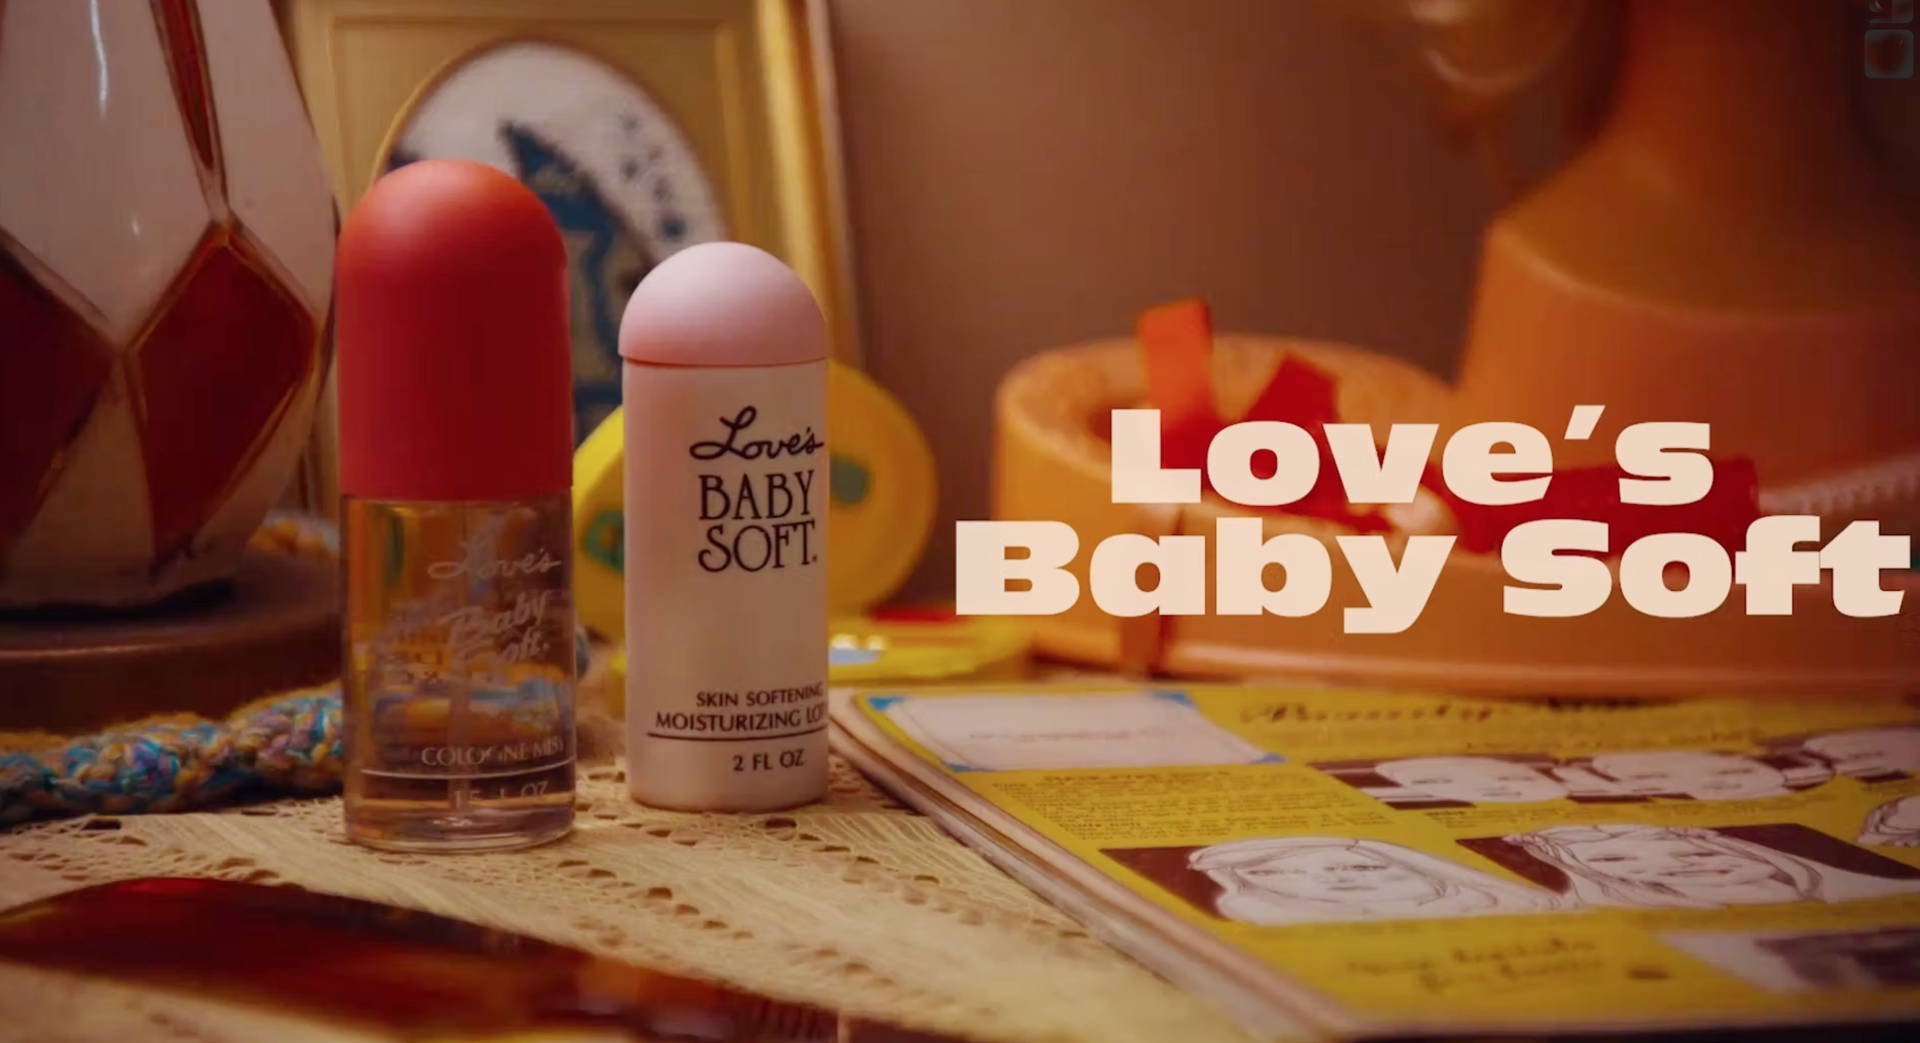 Love's Baby Soft bottle, happy girl, balloons